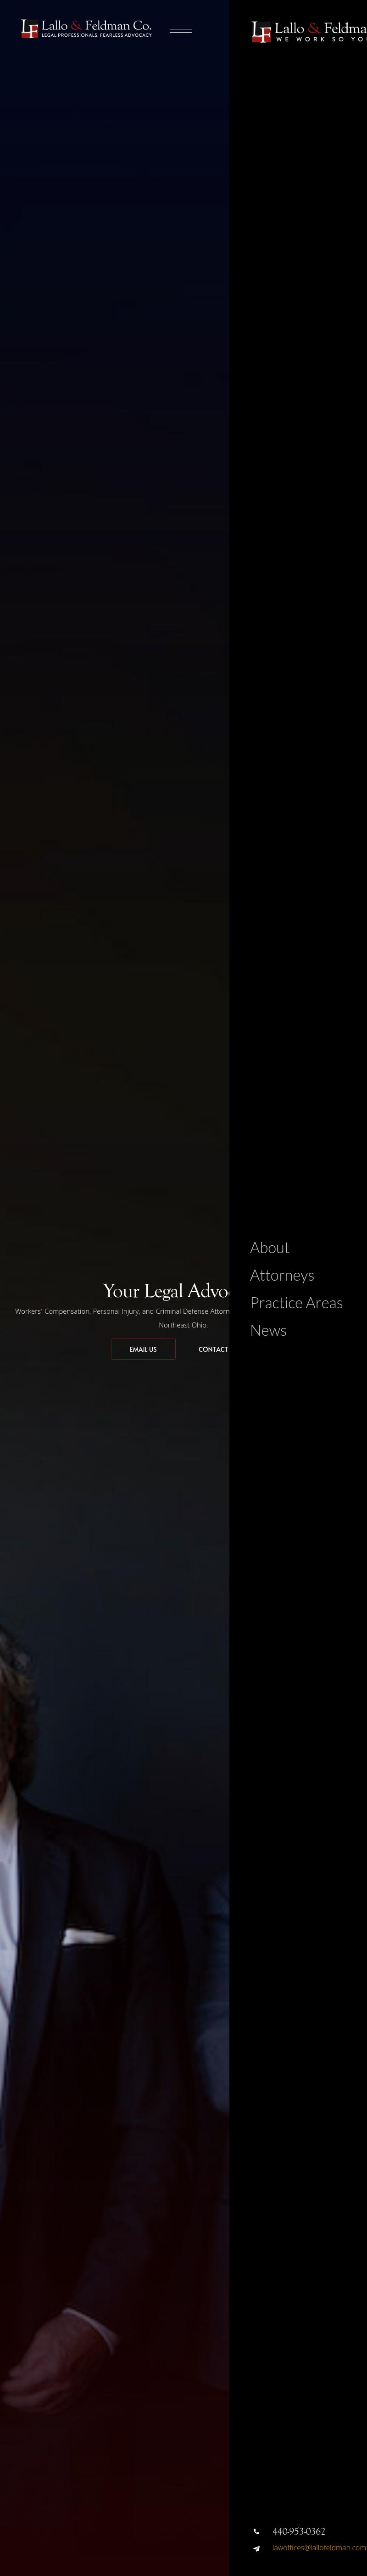 Lallo & Feldman Co., LPA - Cleveland OH Lawyers